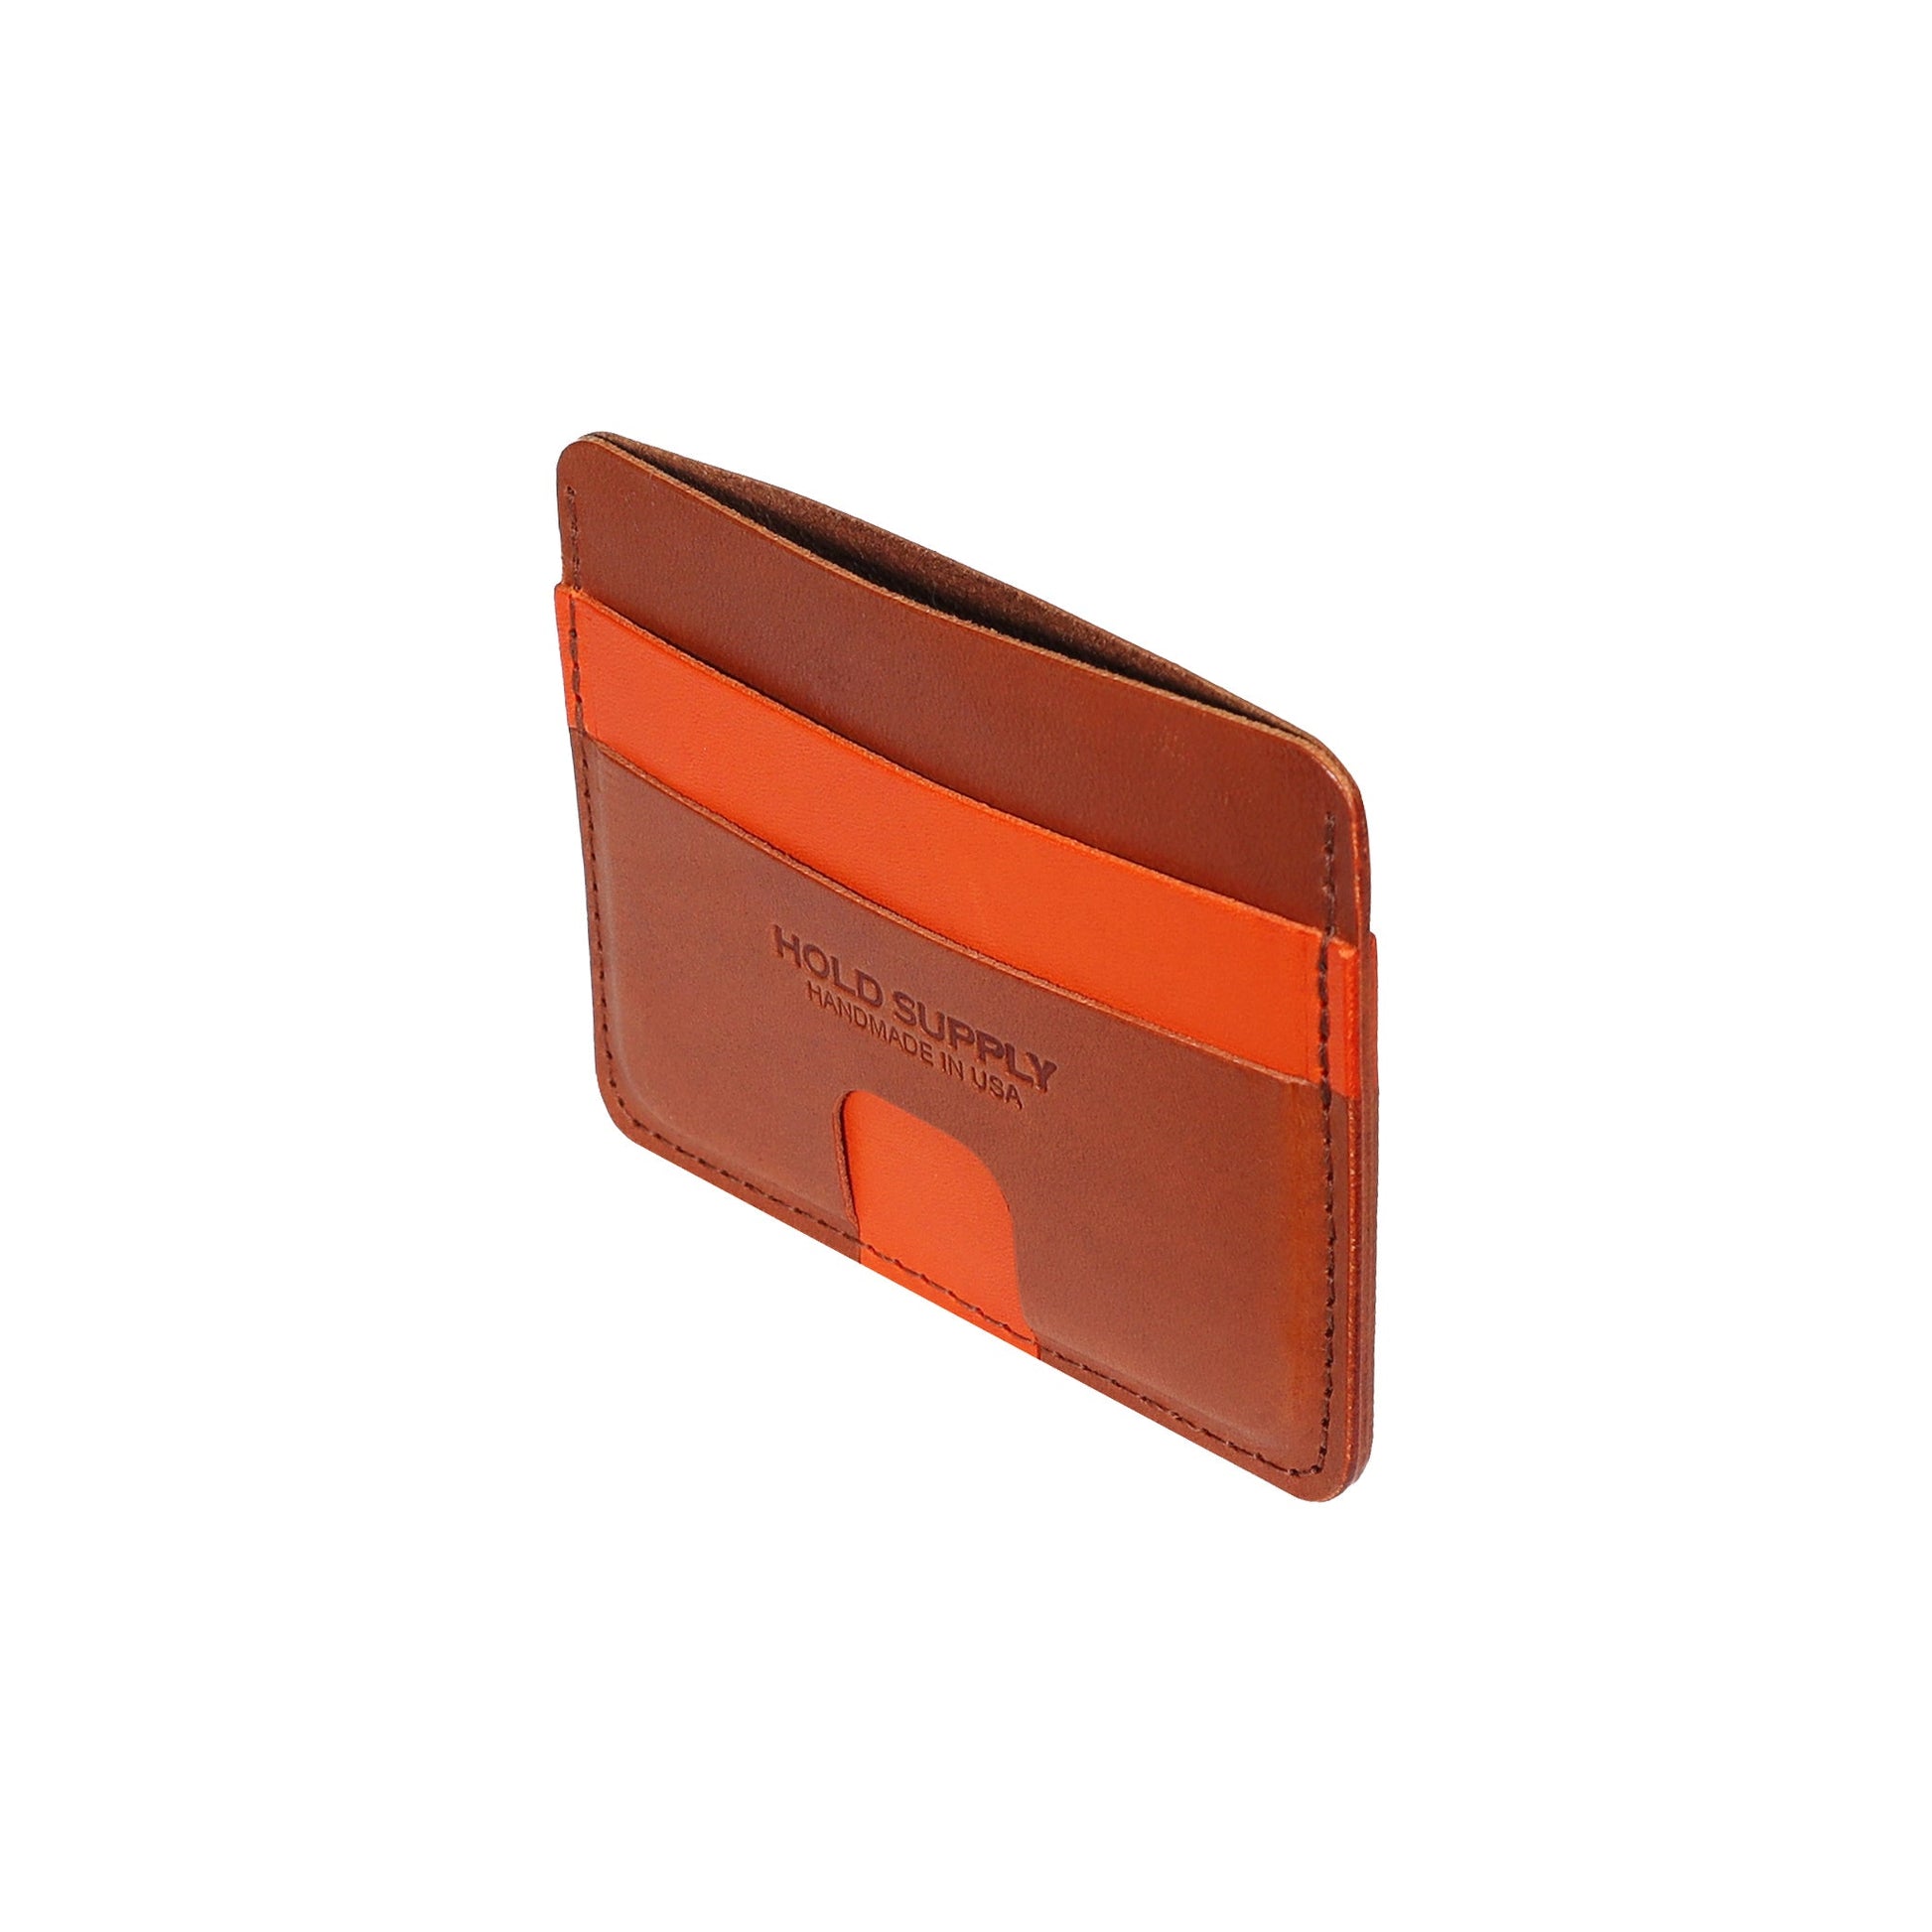 Orange and Brown Leather Card Holder Wallet